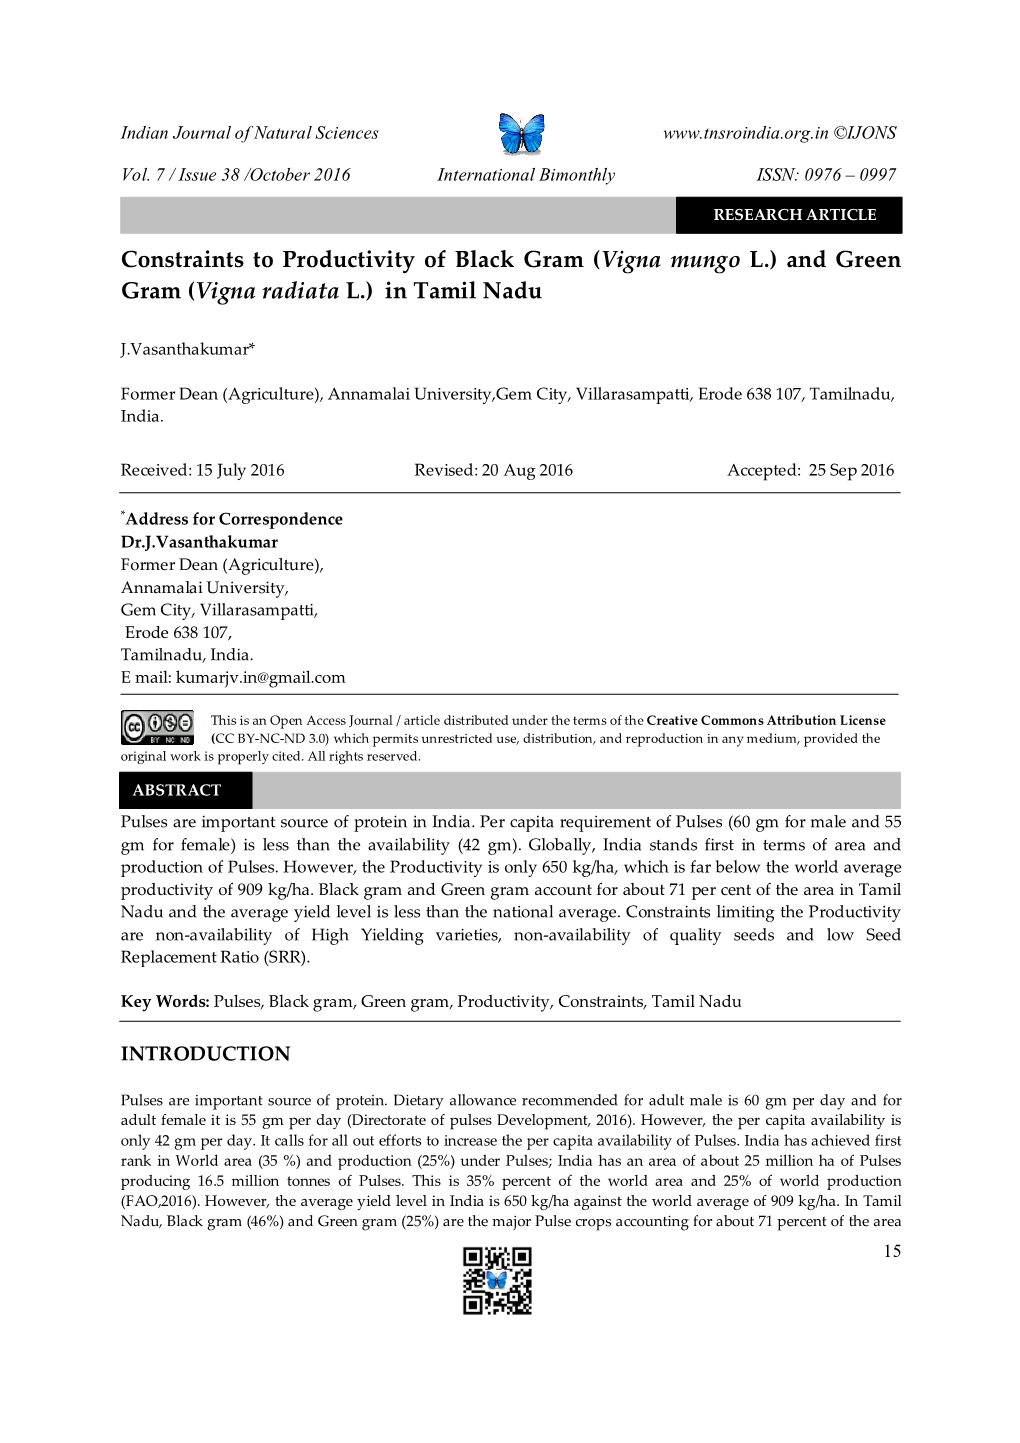 Constraints to Productivity of Black Gram (Vigna Mungo L.) and Green Gram (Vigna Radiata L.) in Tamil Nadu